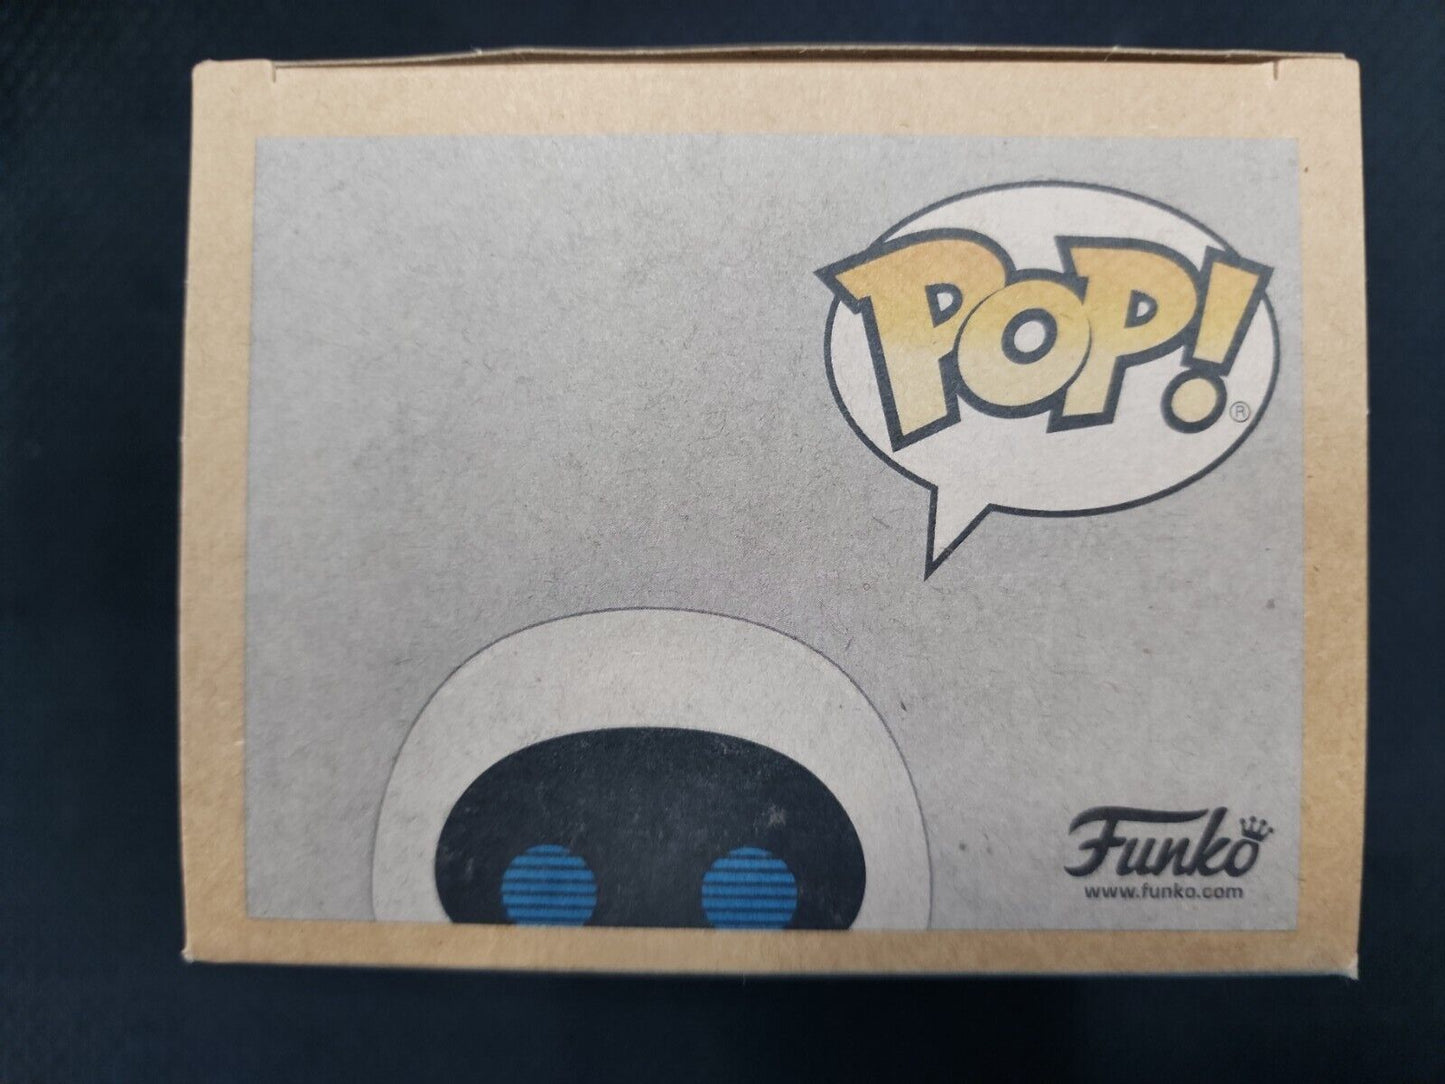 Disney's Wall-E Funko Pop Eve #552 Box Lunch Earth Day Vinyl Figure